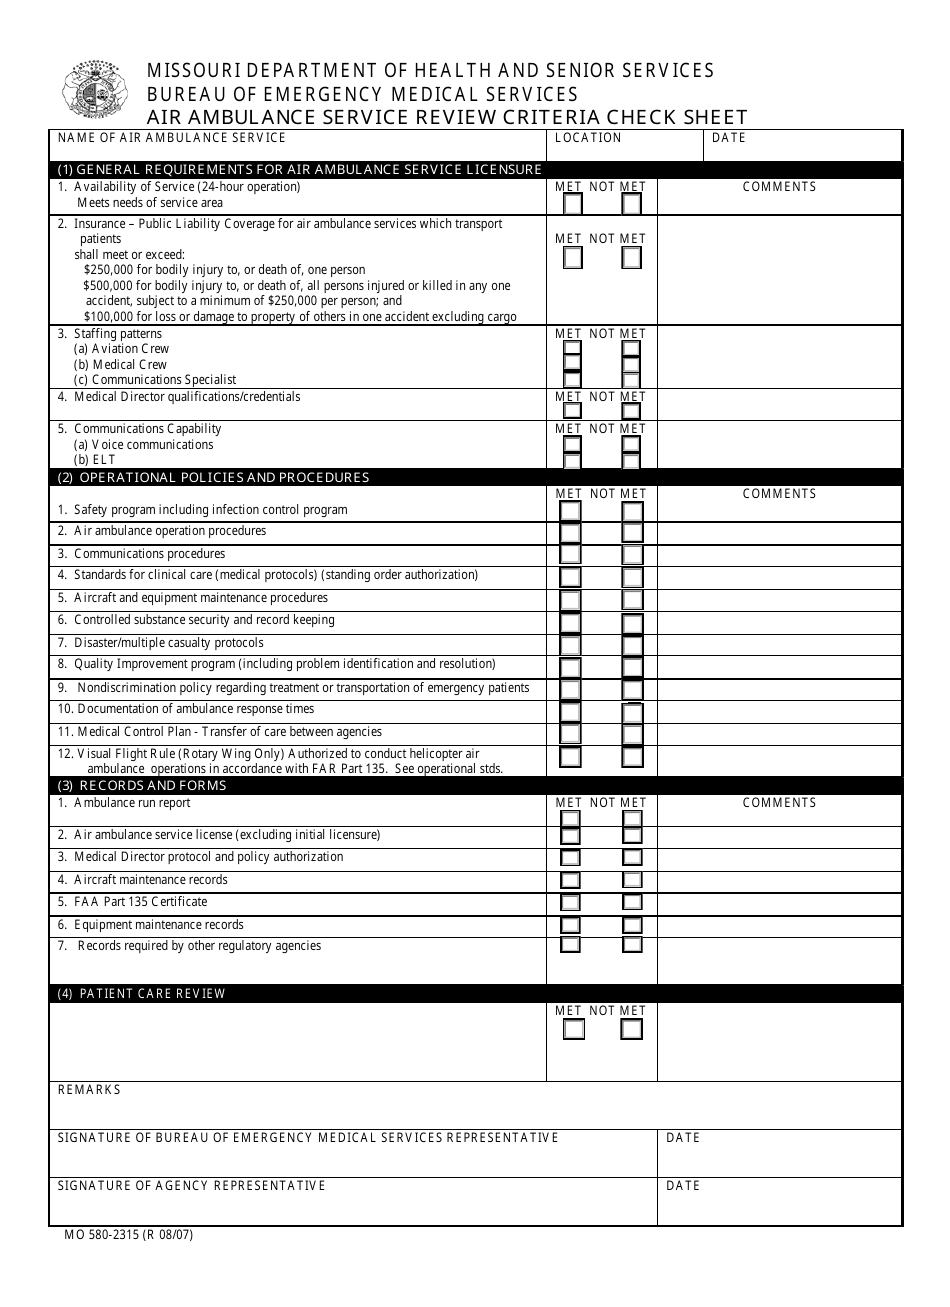 Form MO580-2315 Air Ambulance Service Review Criteria Check Sheet - Missouri, Page 1